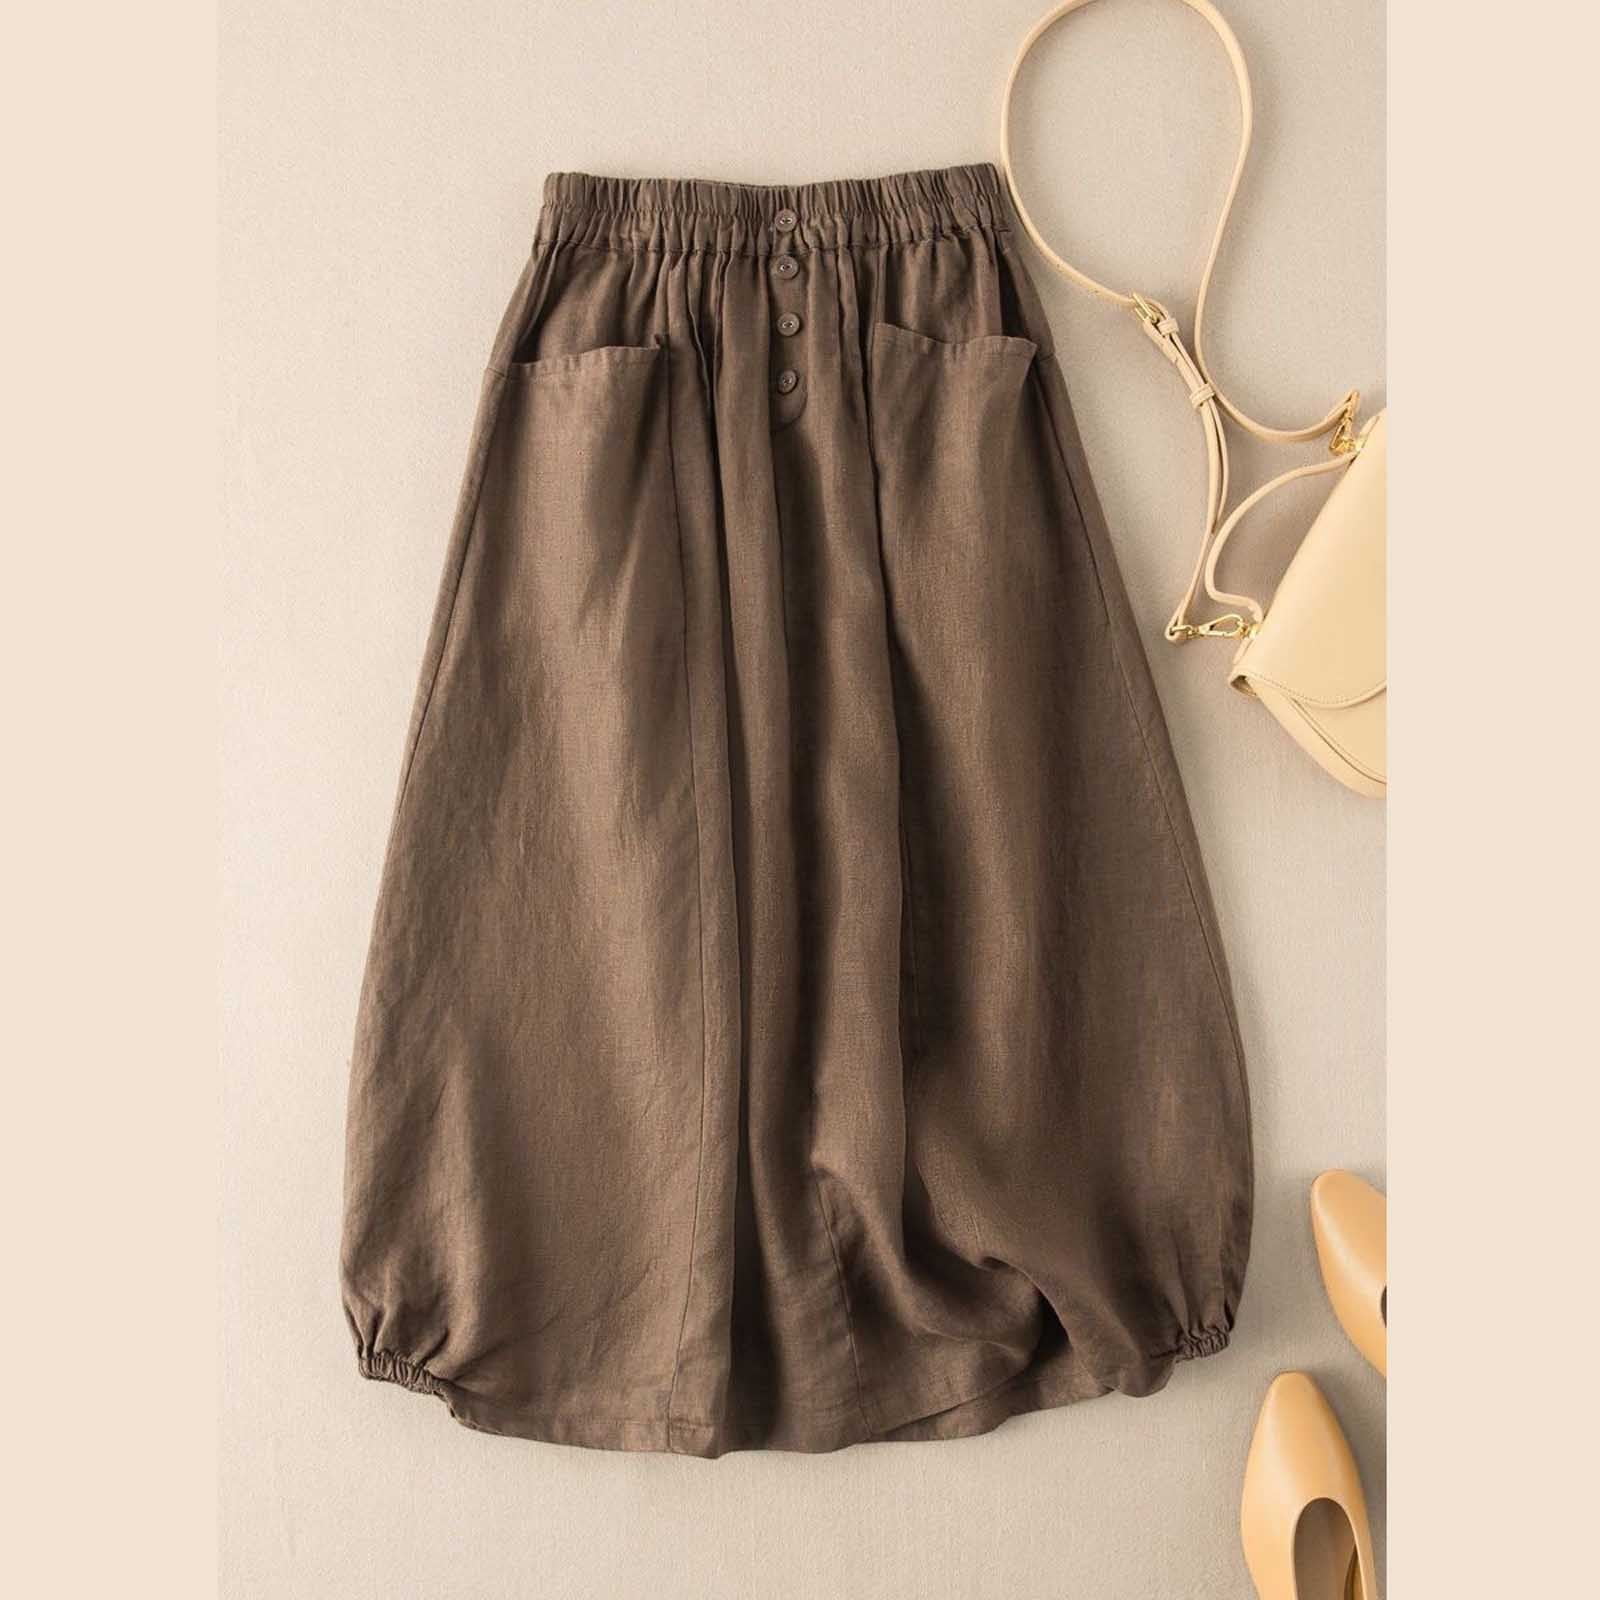 qolati Women's Cotton Linen Midi Skirt Summer Casual Elastic Waistband ...